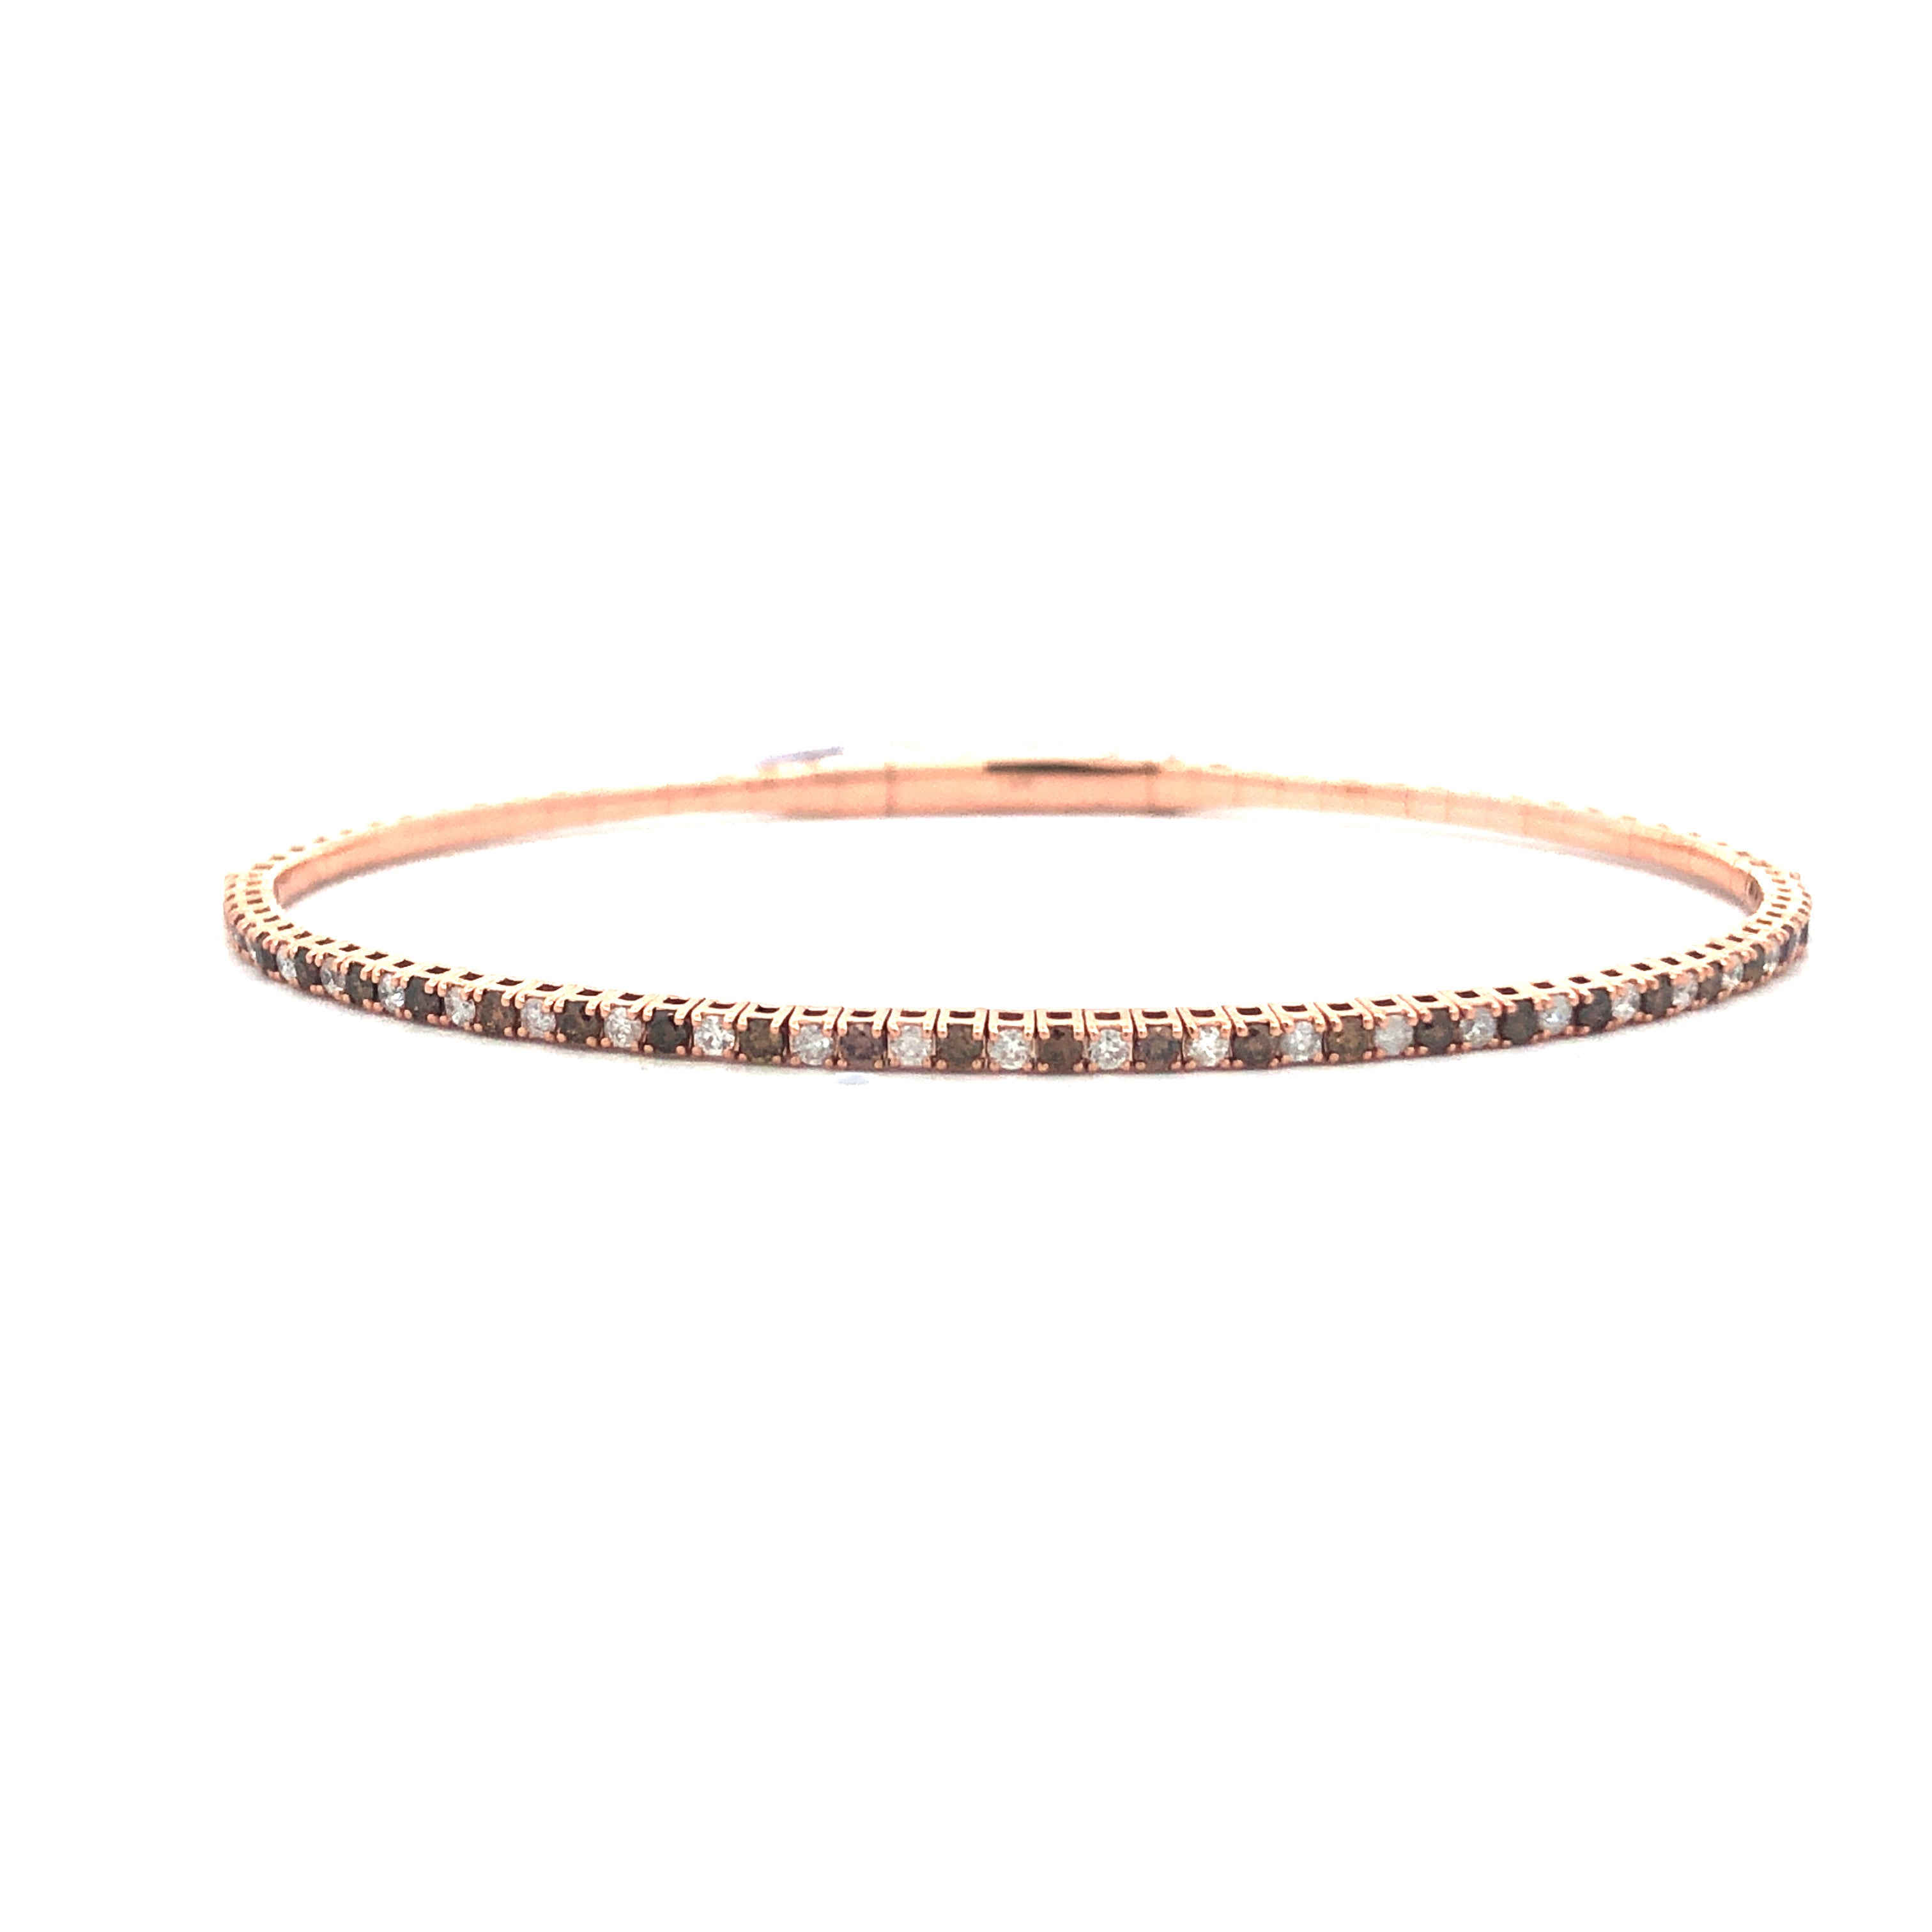 BRAND NEW 3cttw Diamond Tennis Bracelet in White Gold – The Castle Jewelry